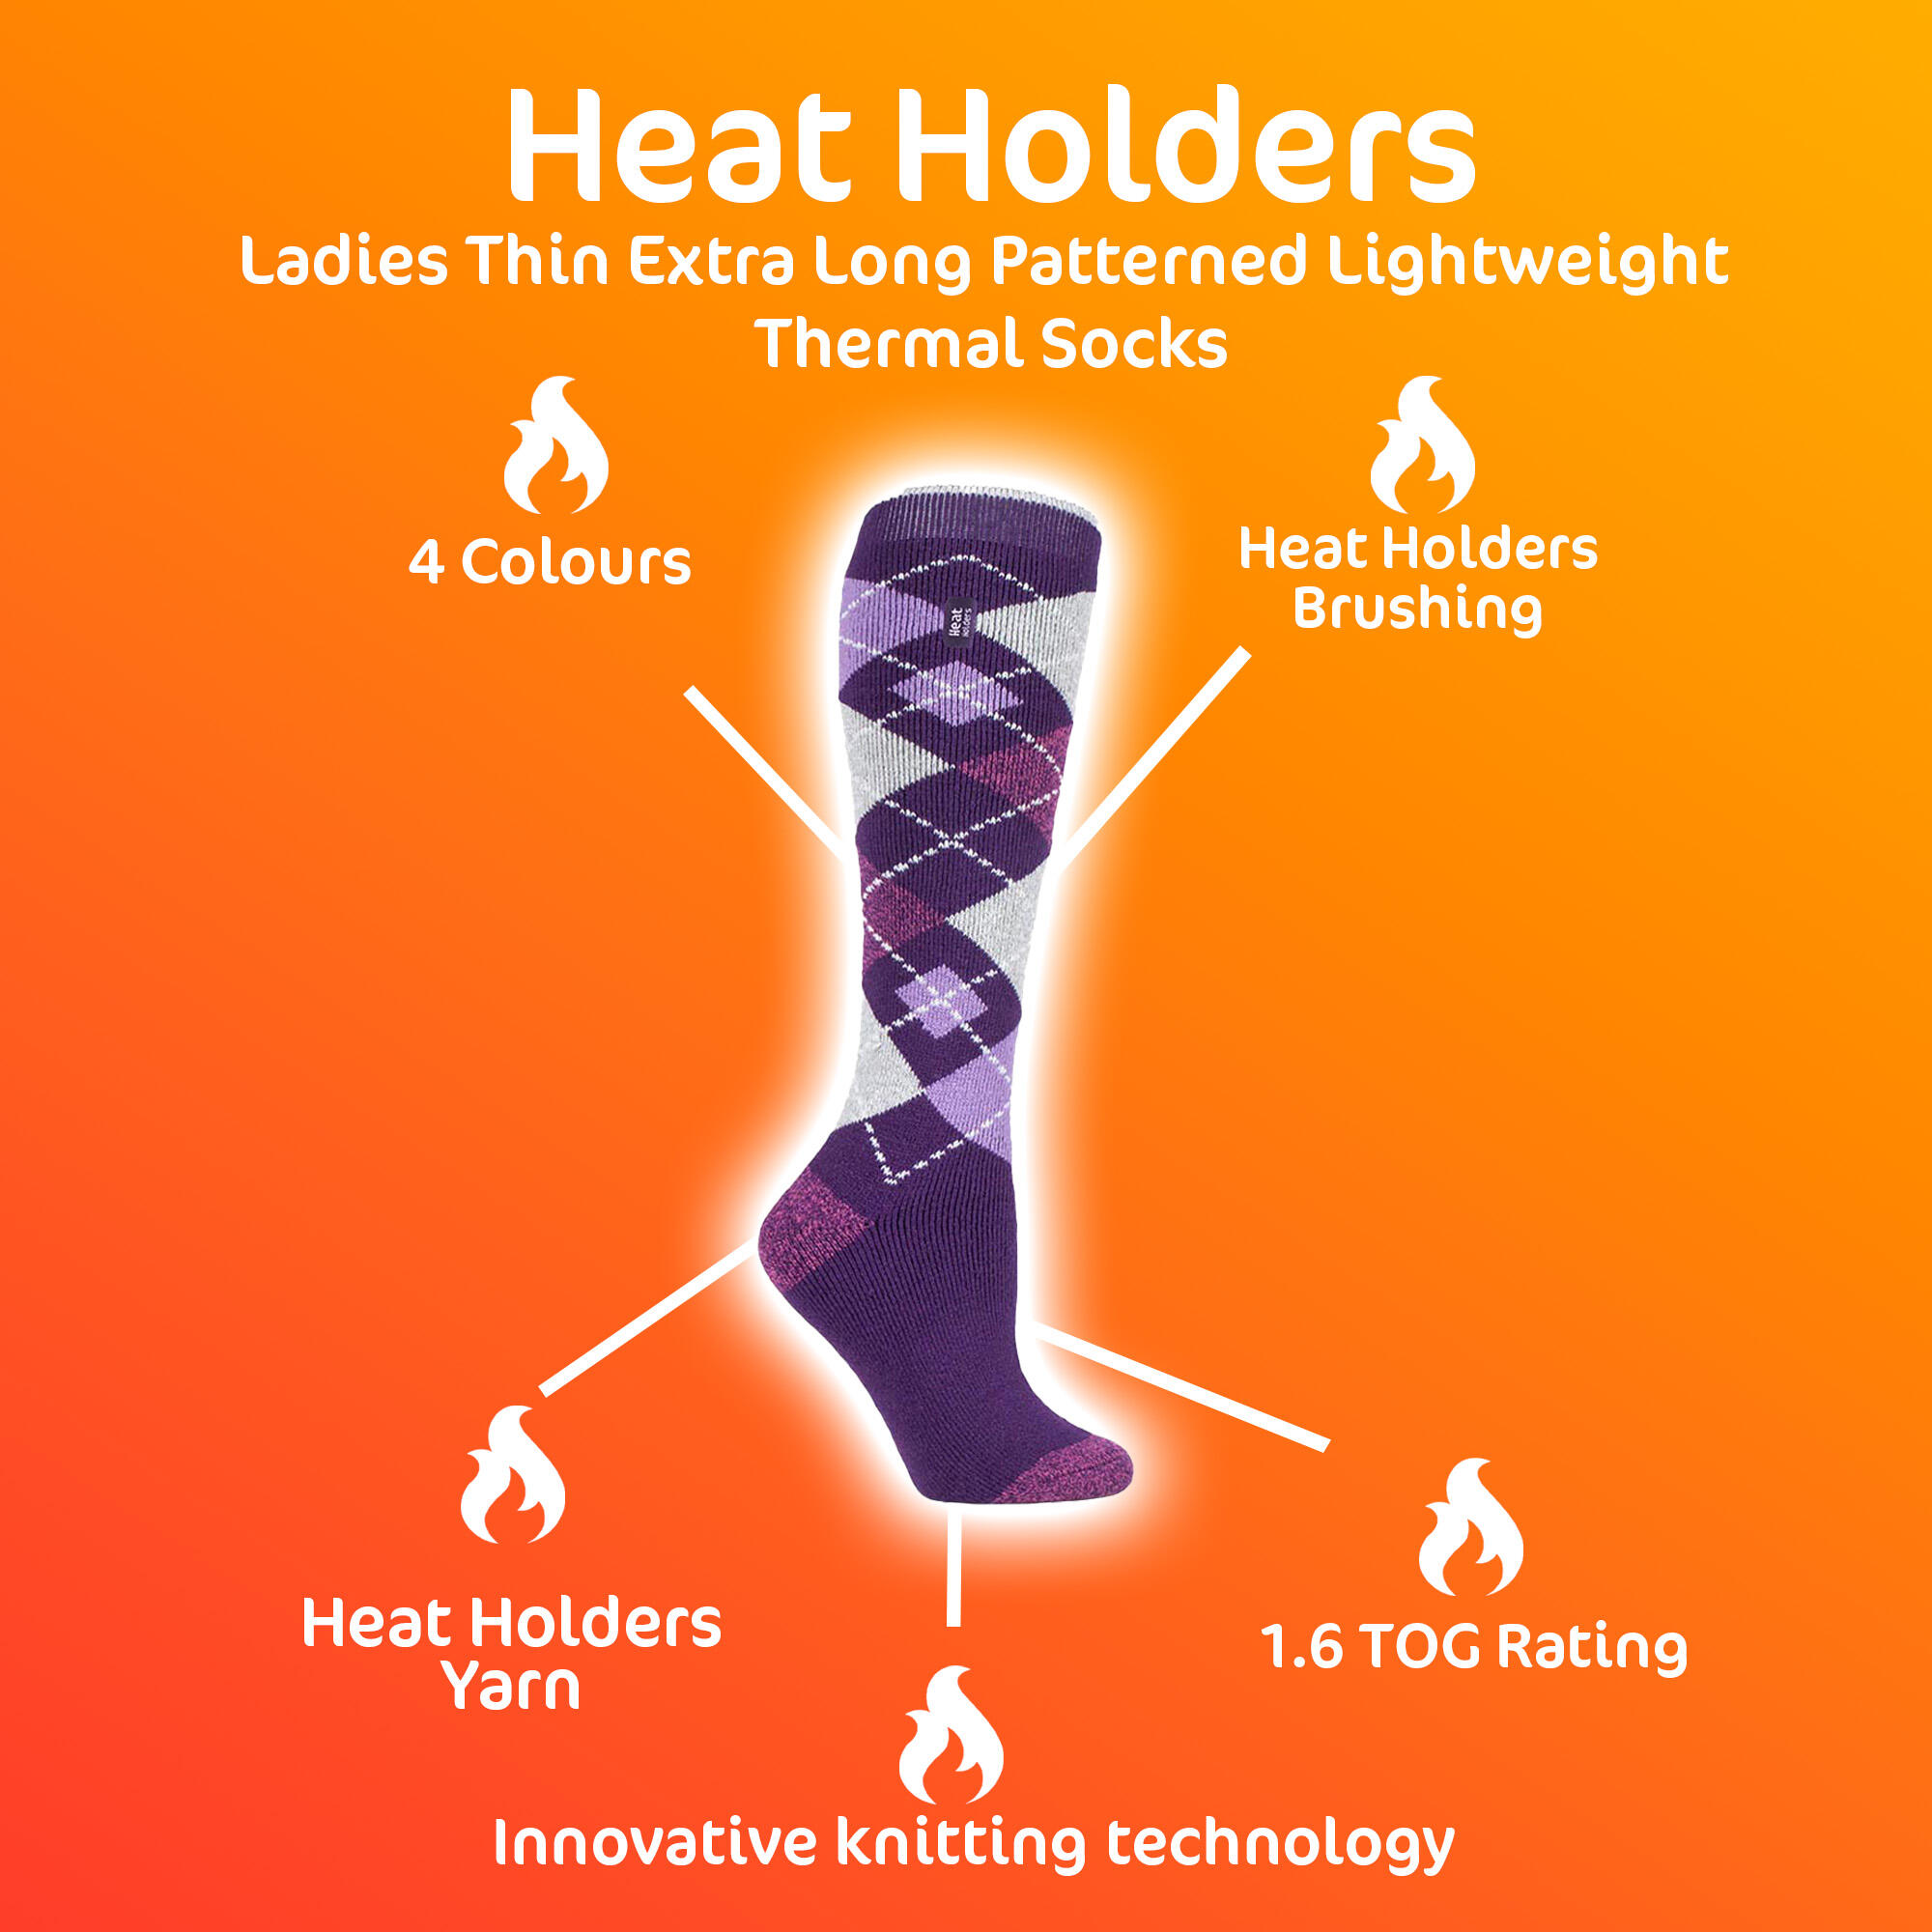 Ladies Thin Extra Long Lightweight Thermal Socks 3/7